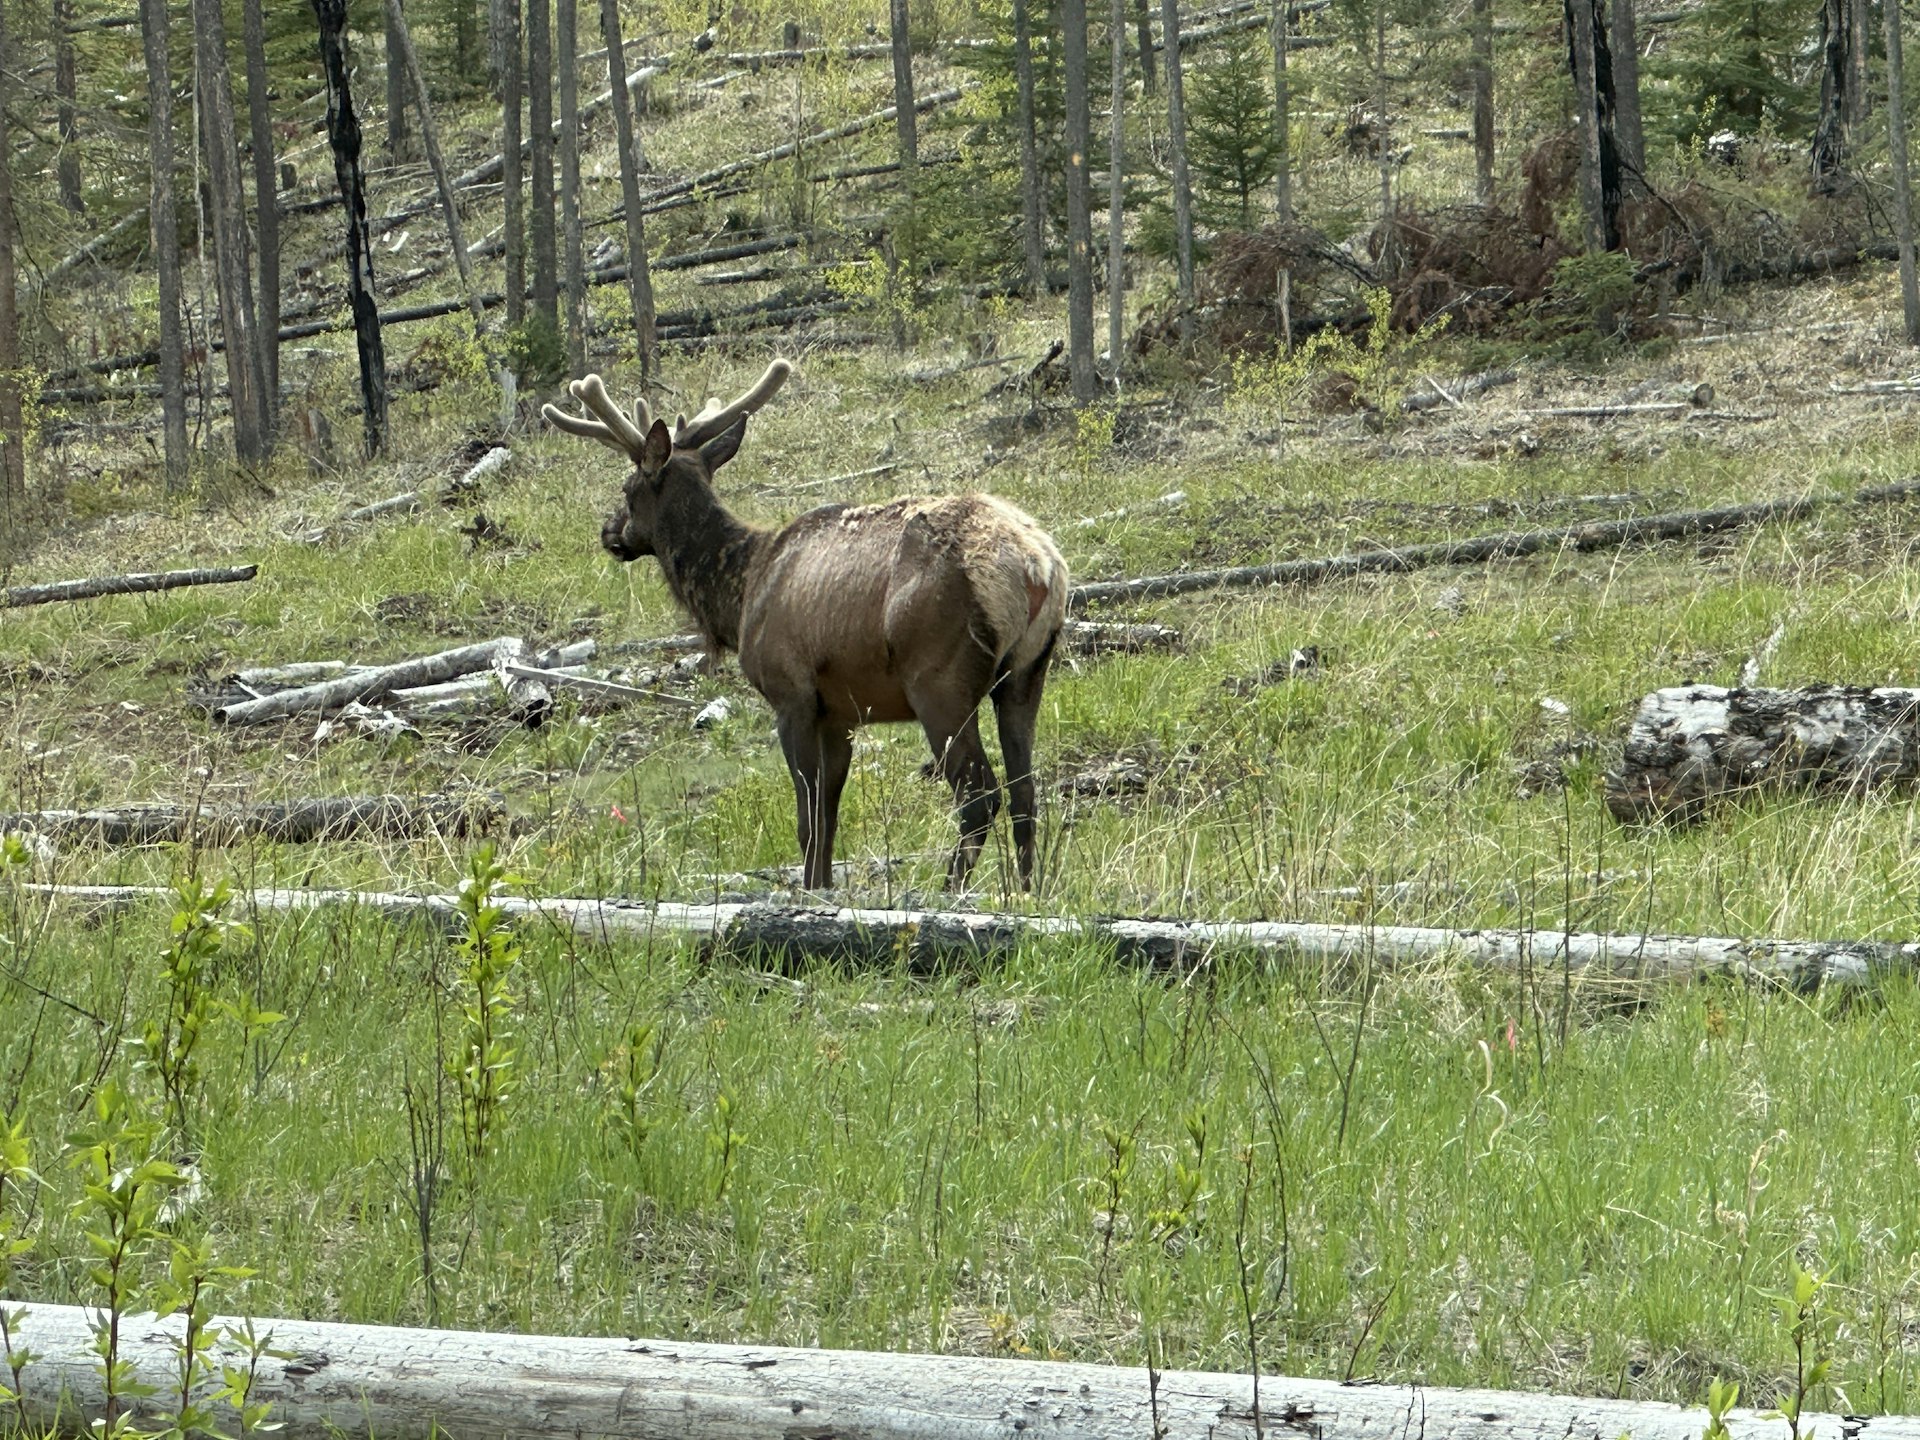 An elk: a large deer-like creature in woodland